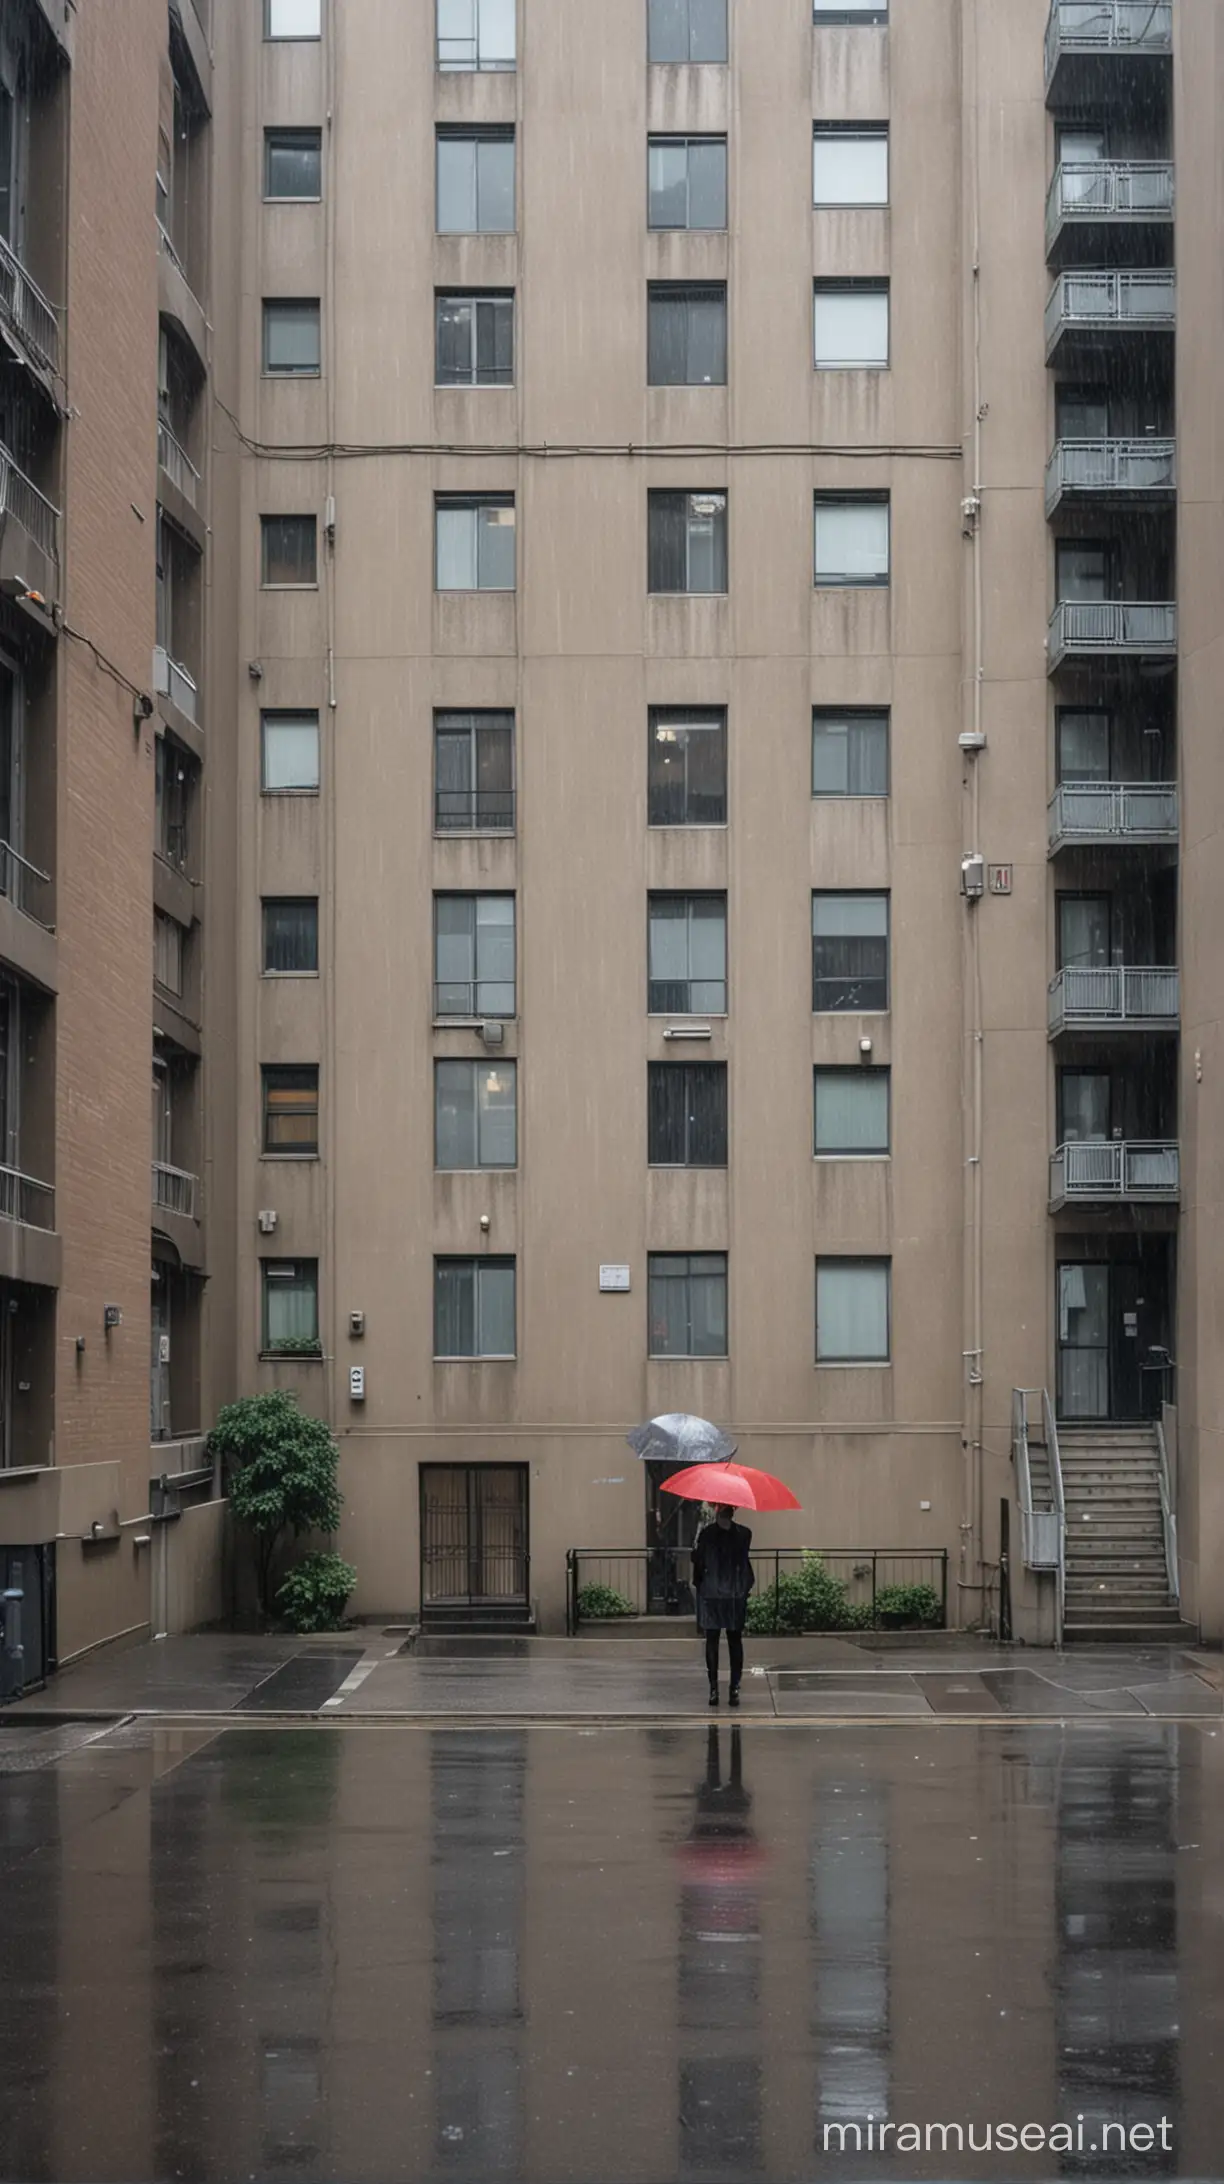 Man Contemplating Under Umbrella on Rainy City Street